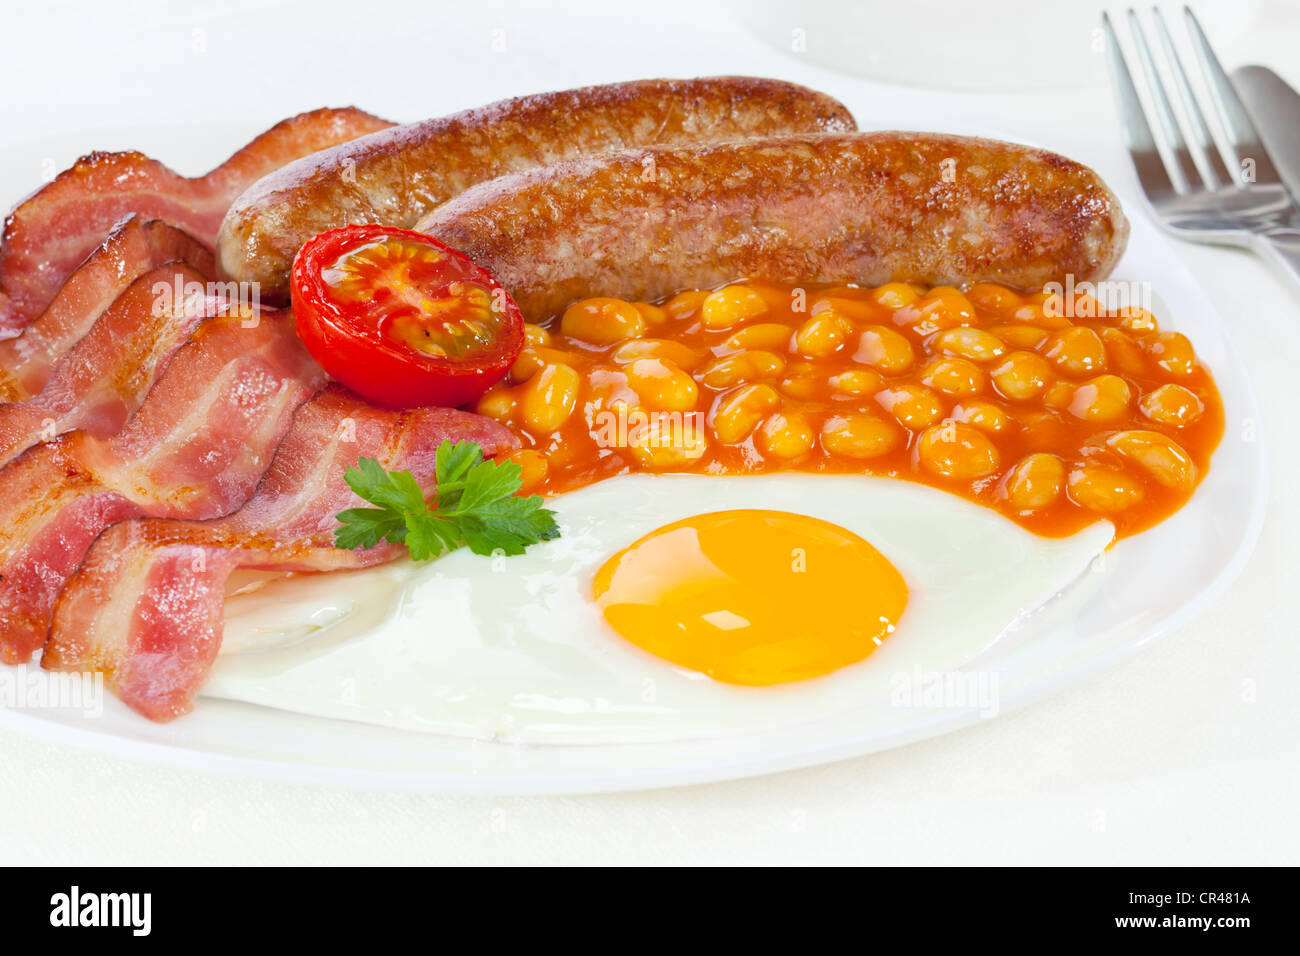 Языком яички. Жареные сосиски завтрак англичан. Английский бекон. Бекон на английском языке. English Breakfast sausage.